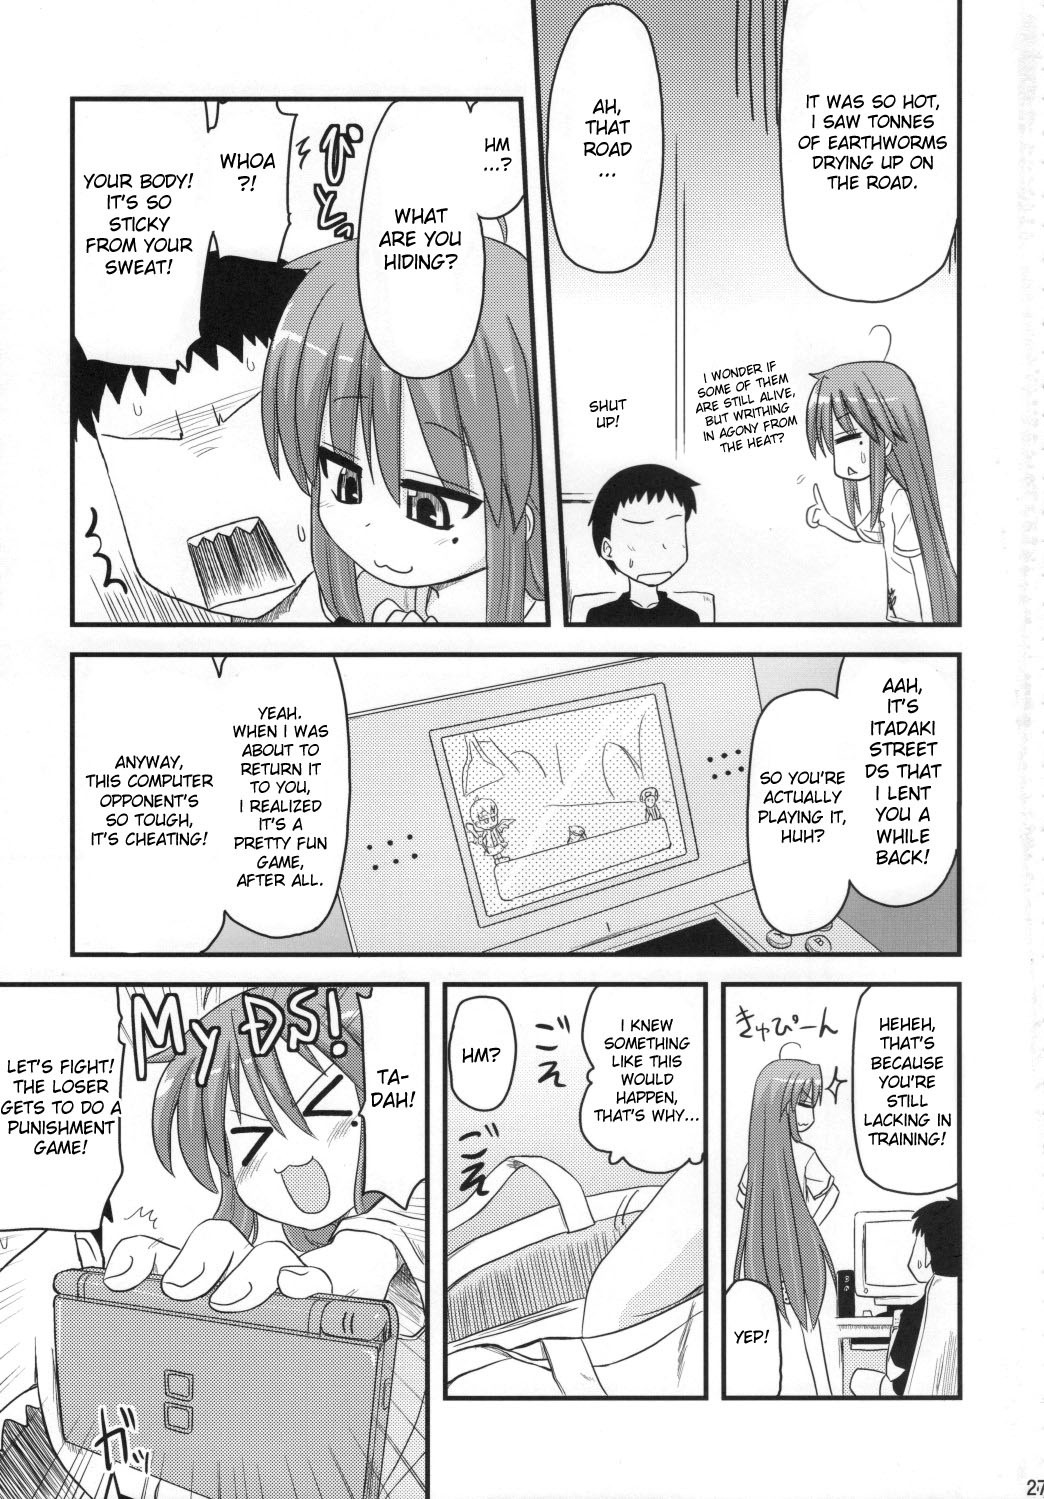 Konata and Oh-zu 4 people each and every one + 1 hentai manga picture 23